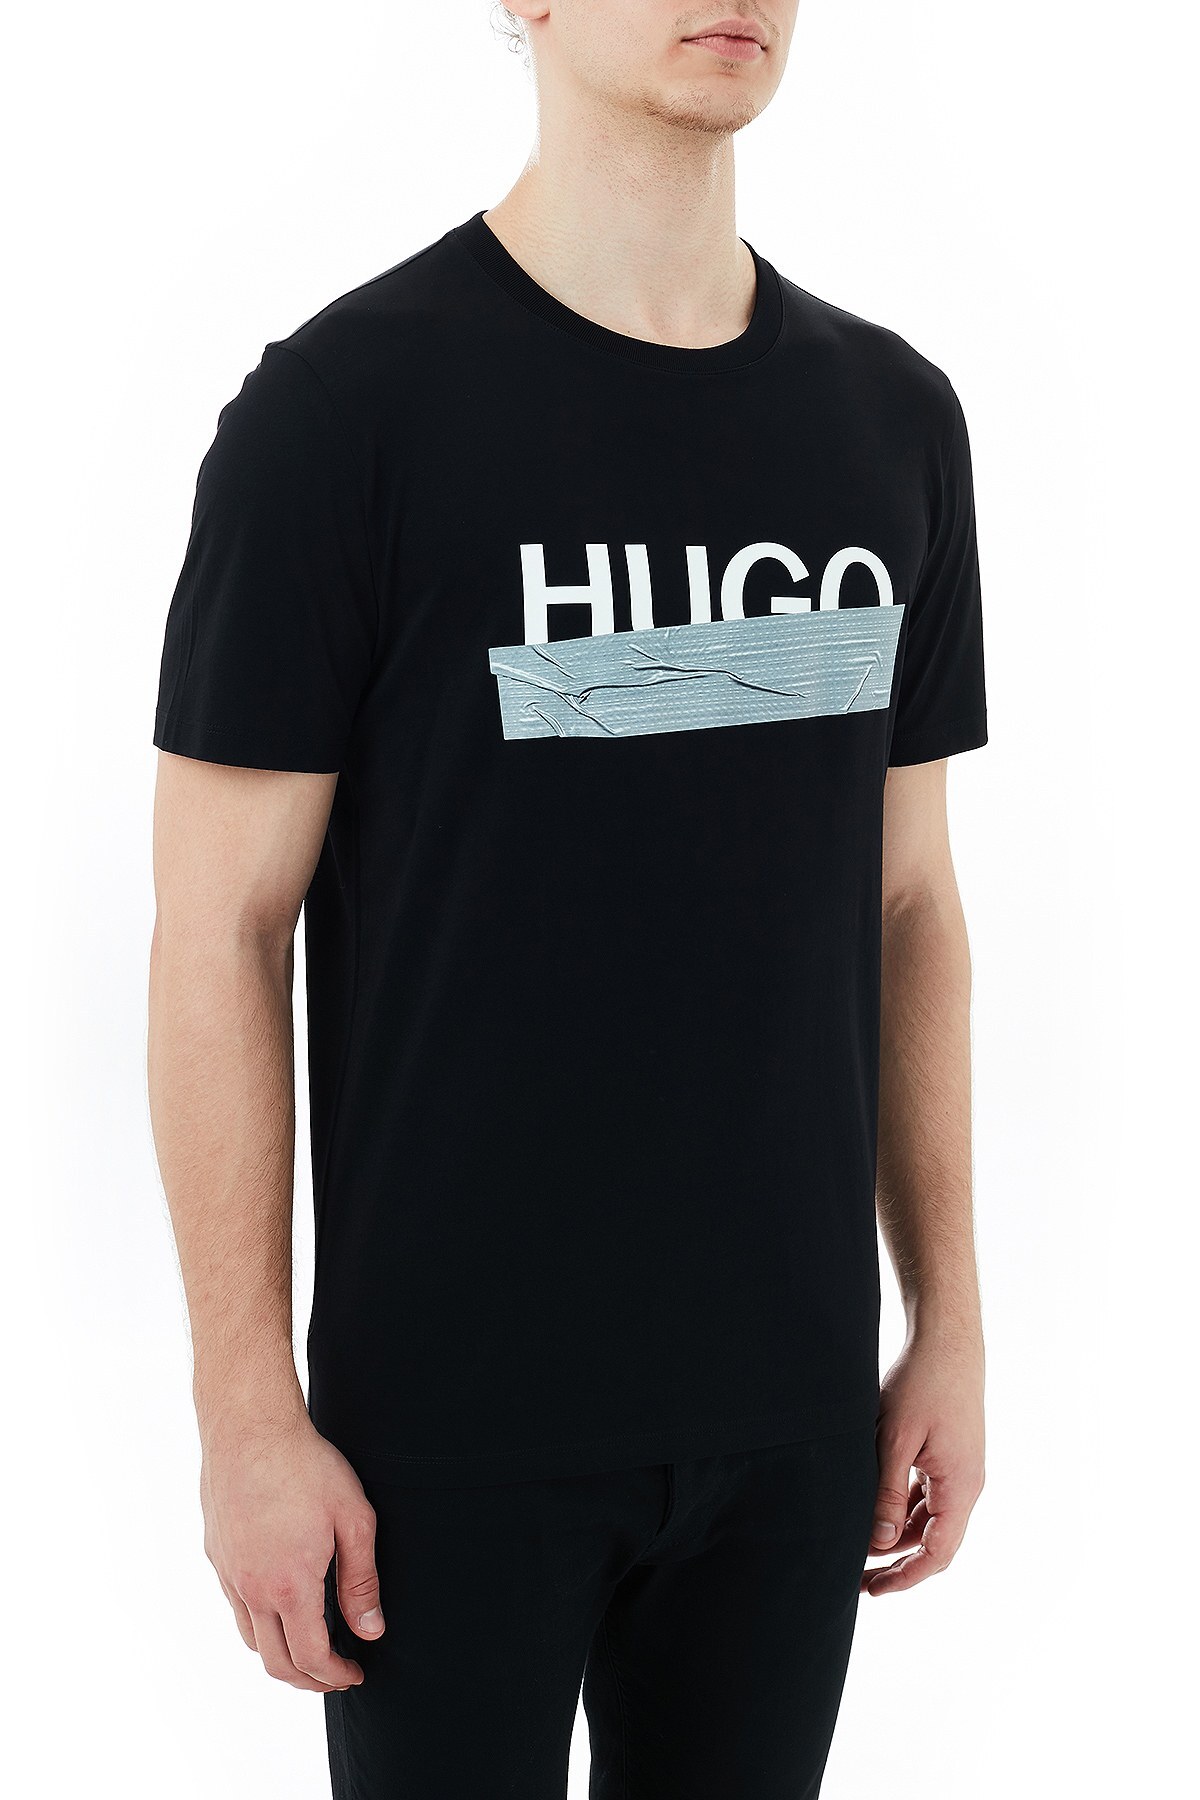 Hugo Boss Regular Fit Baskılı Bisiklet Yaka % 100 Pamuk Erkek T Shirt 50436413 001 SİYAH